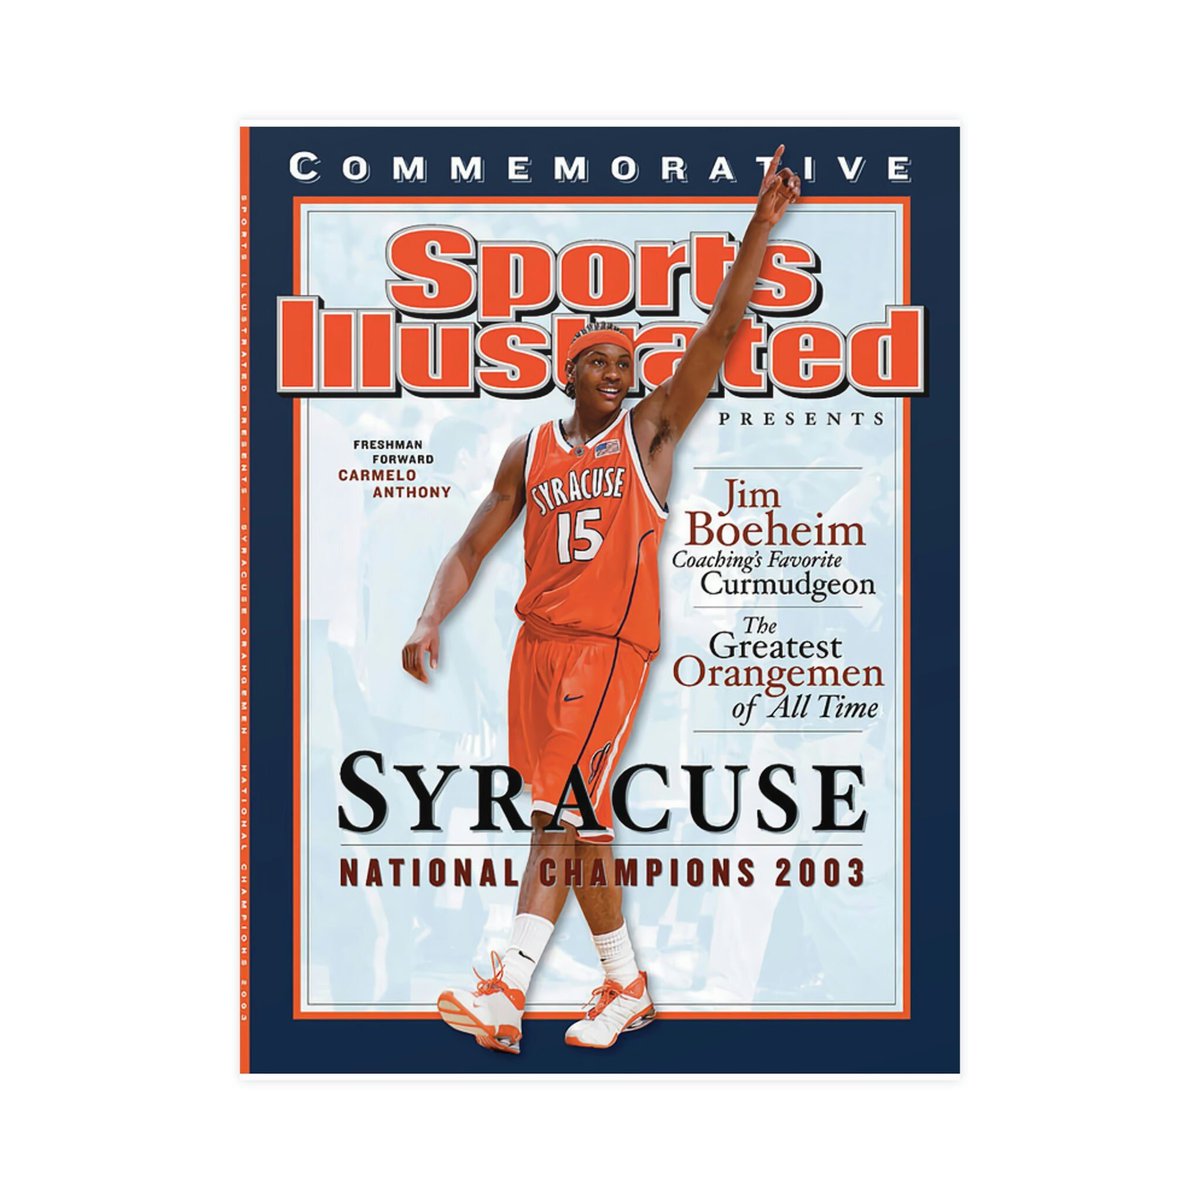 Excited to share this item from my #etsy shop: Syracuse National Championship Poster - Syracuse Oranage Basketball -Carmelo Anthony #joshallen #buffalobills #carmelosyracuse #syracuseorange #finalfour #newyorksports https://t.co/GxHE6u8yNB https://t.co/G3c7Sq10ZL